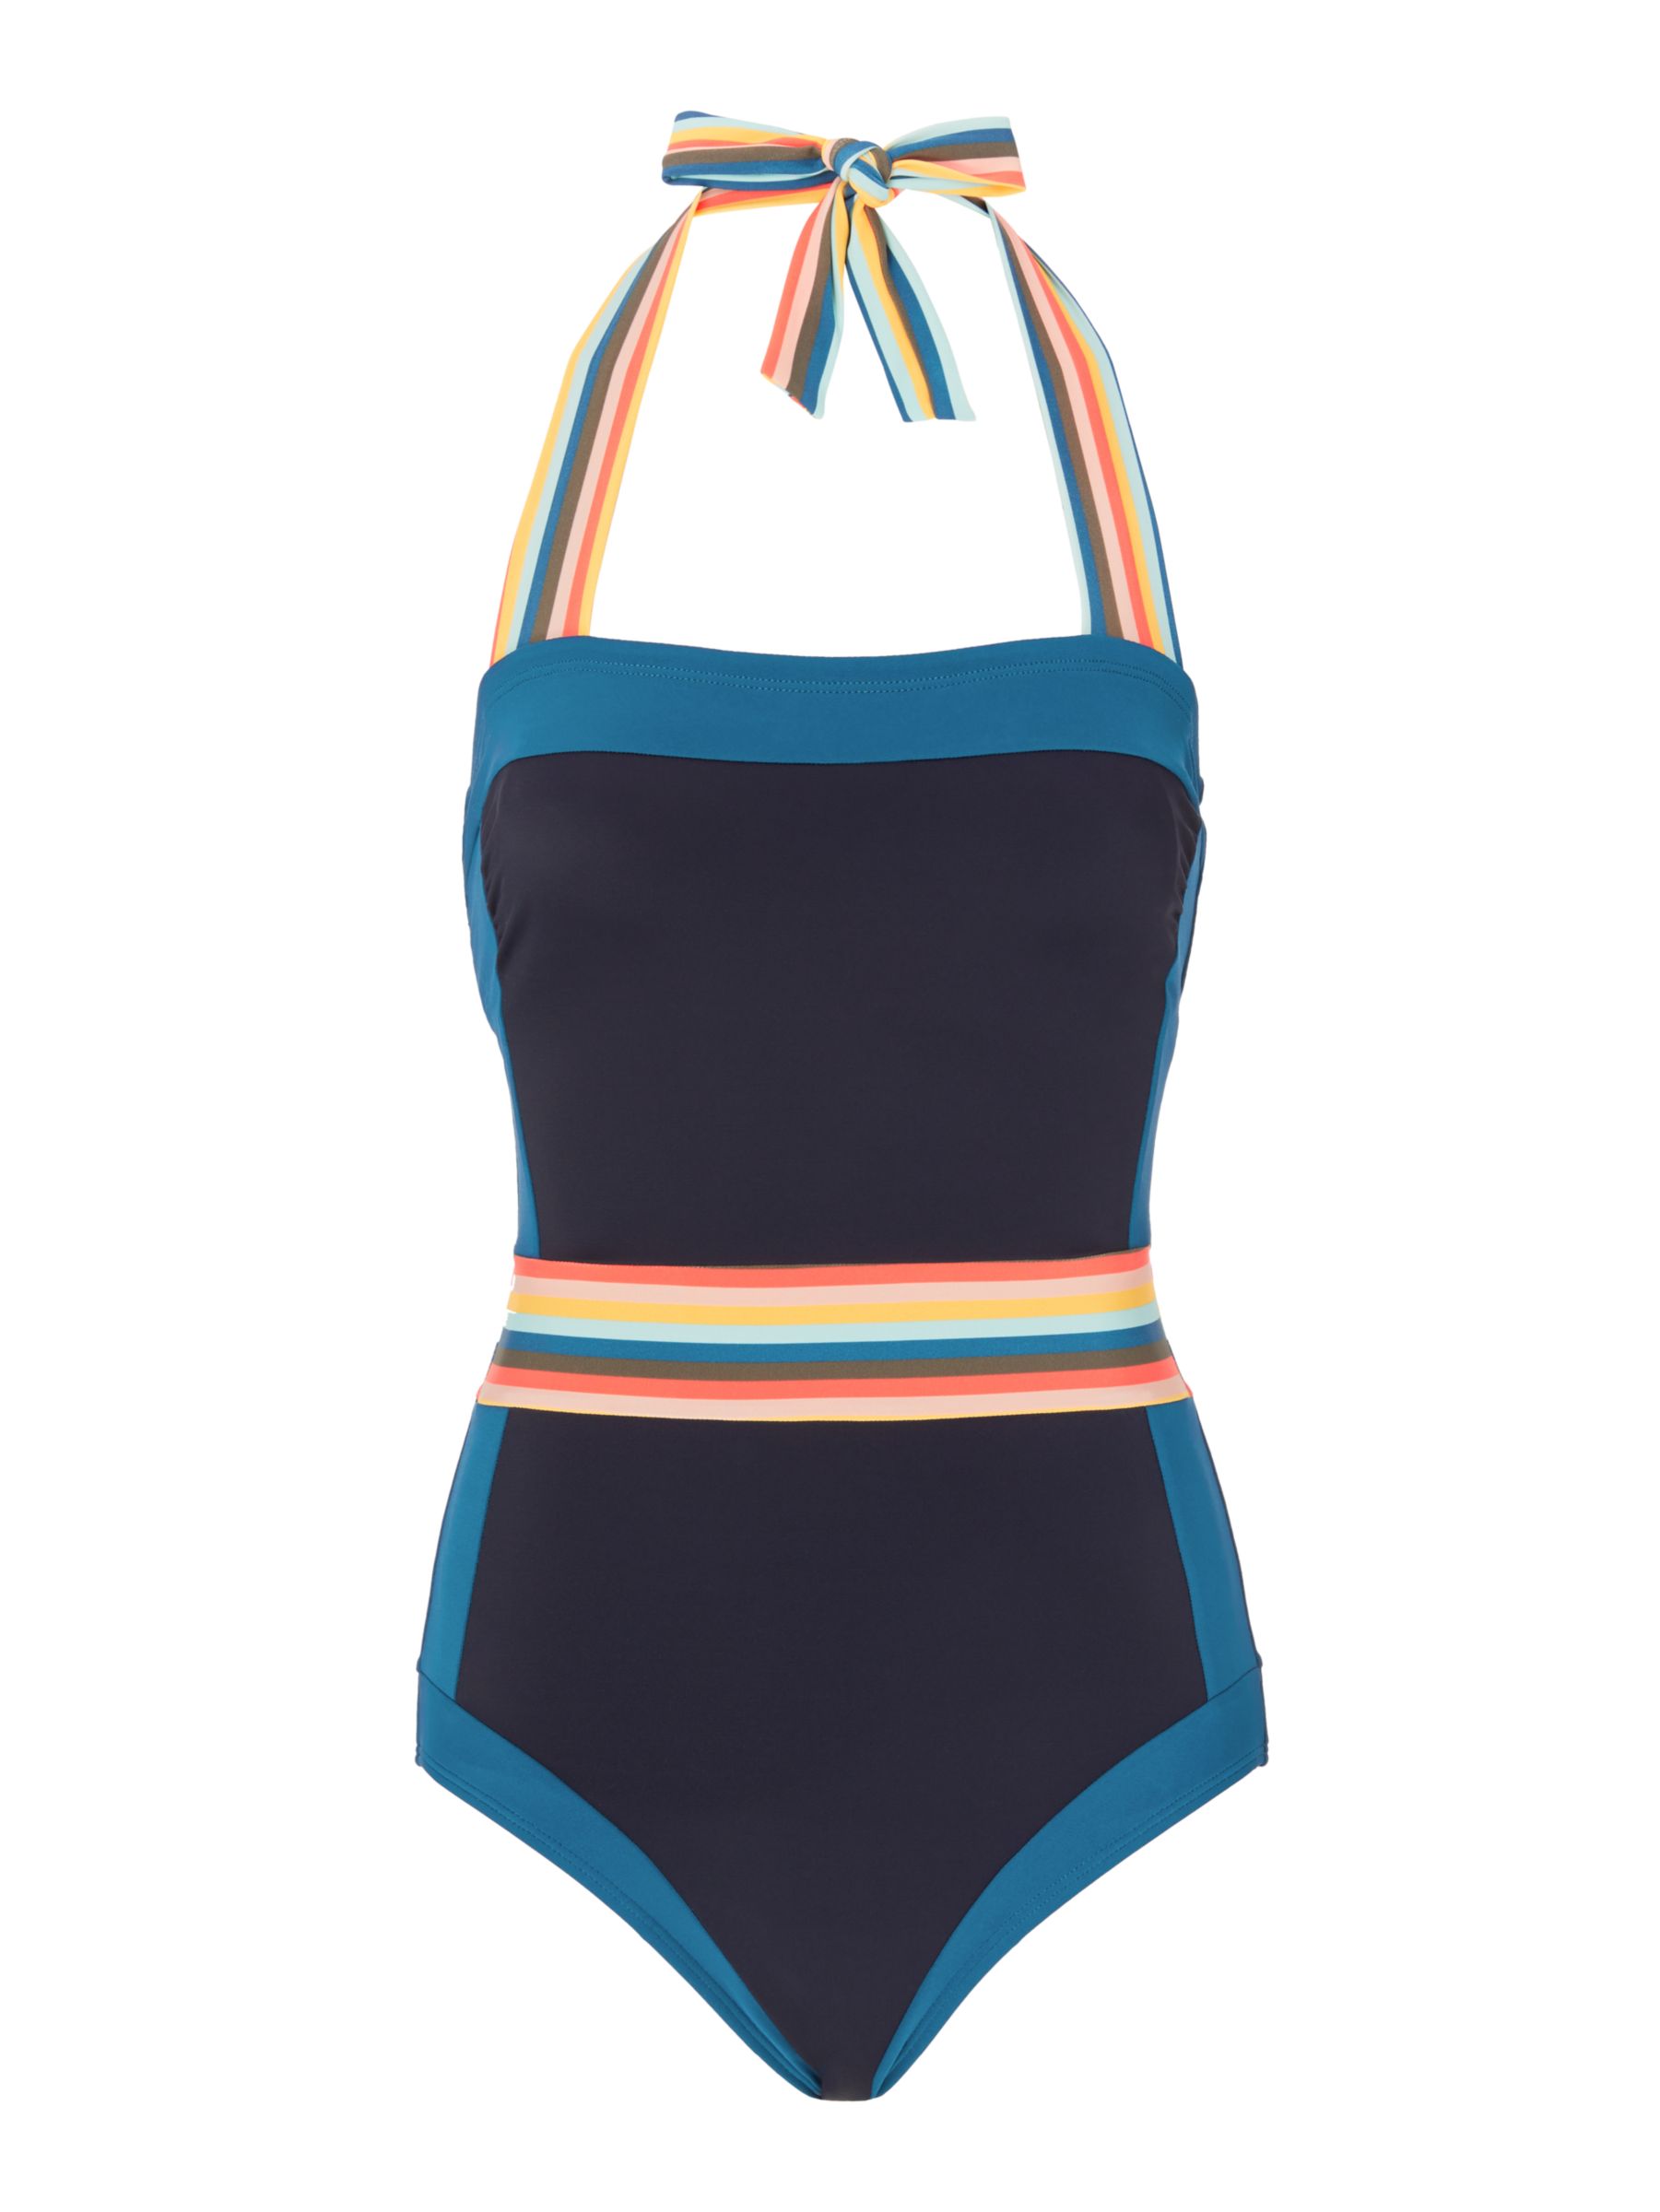 Boden Santorini Swimsuit at John Lewis & Partners